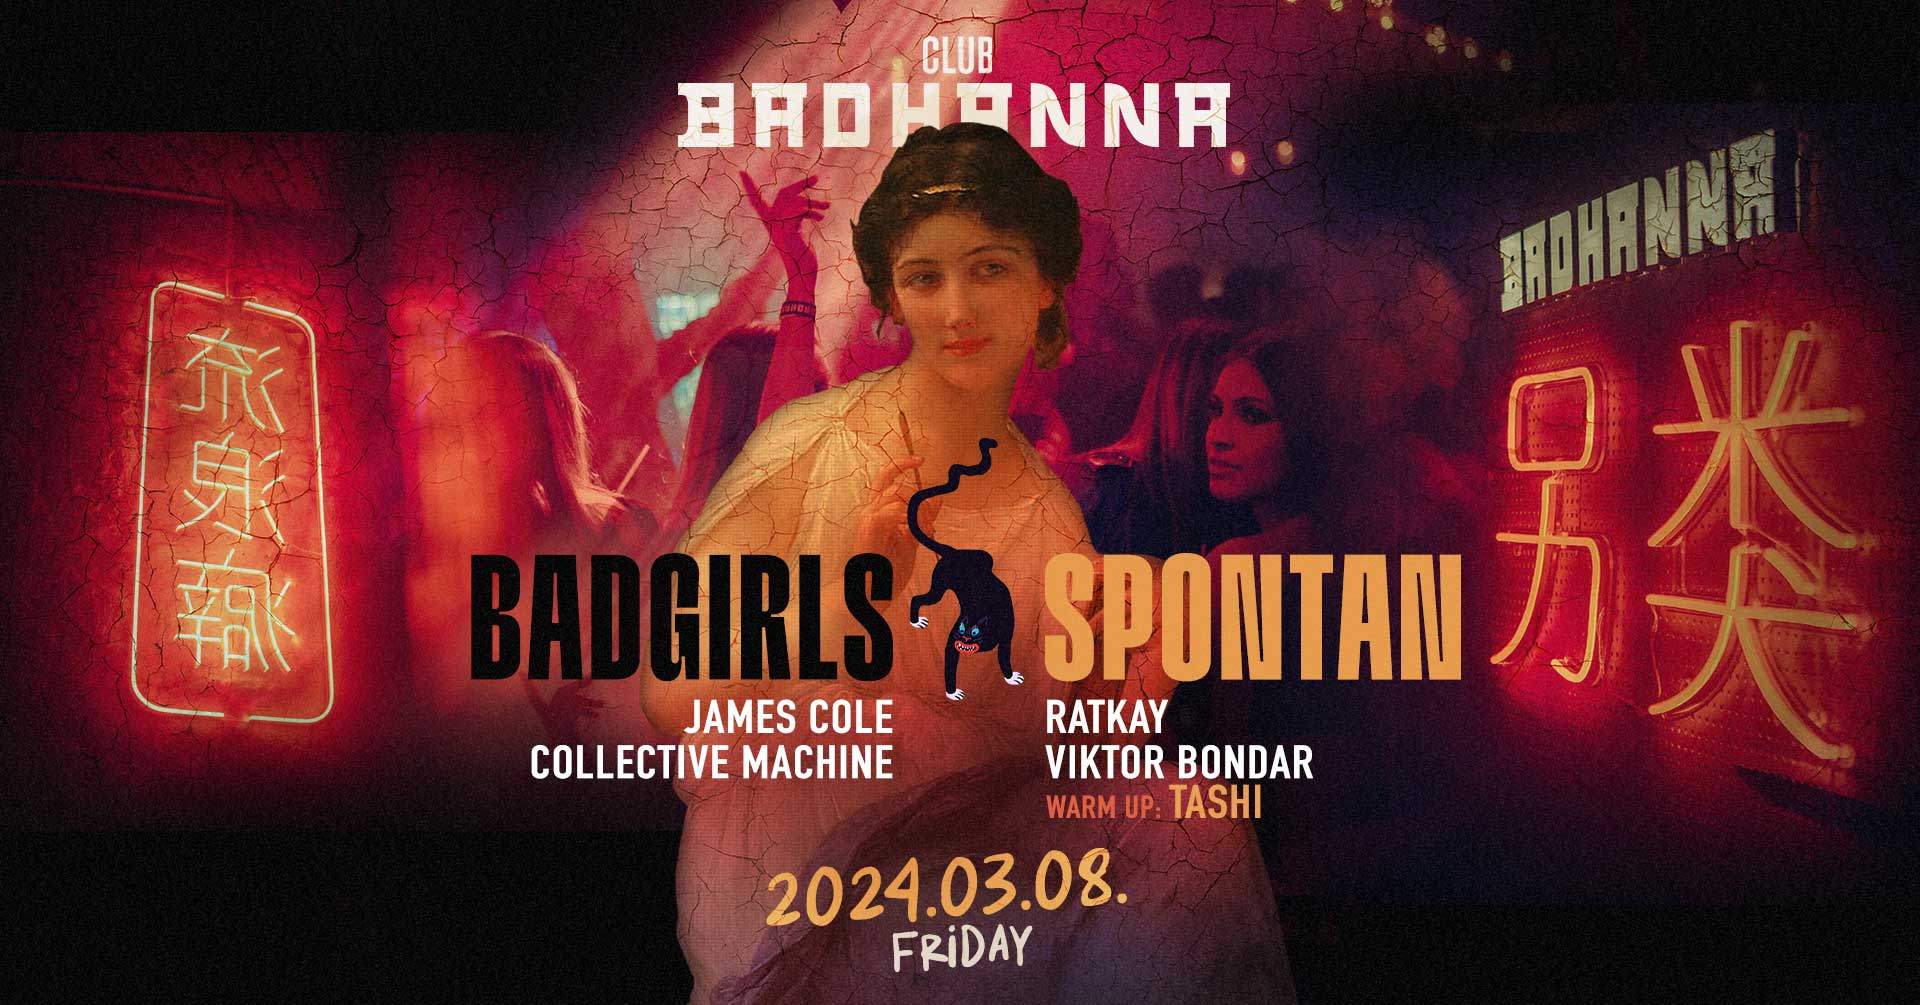 Badgirls vs SPONTAN Club BADHANNA Women's day Edition - フライヤー表